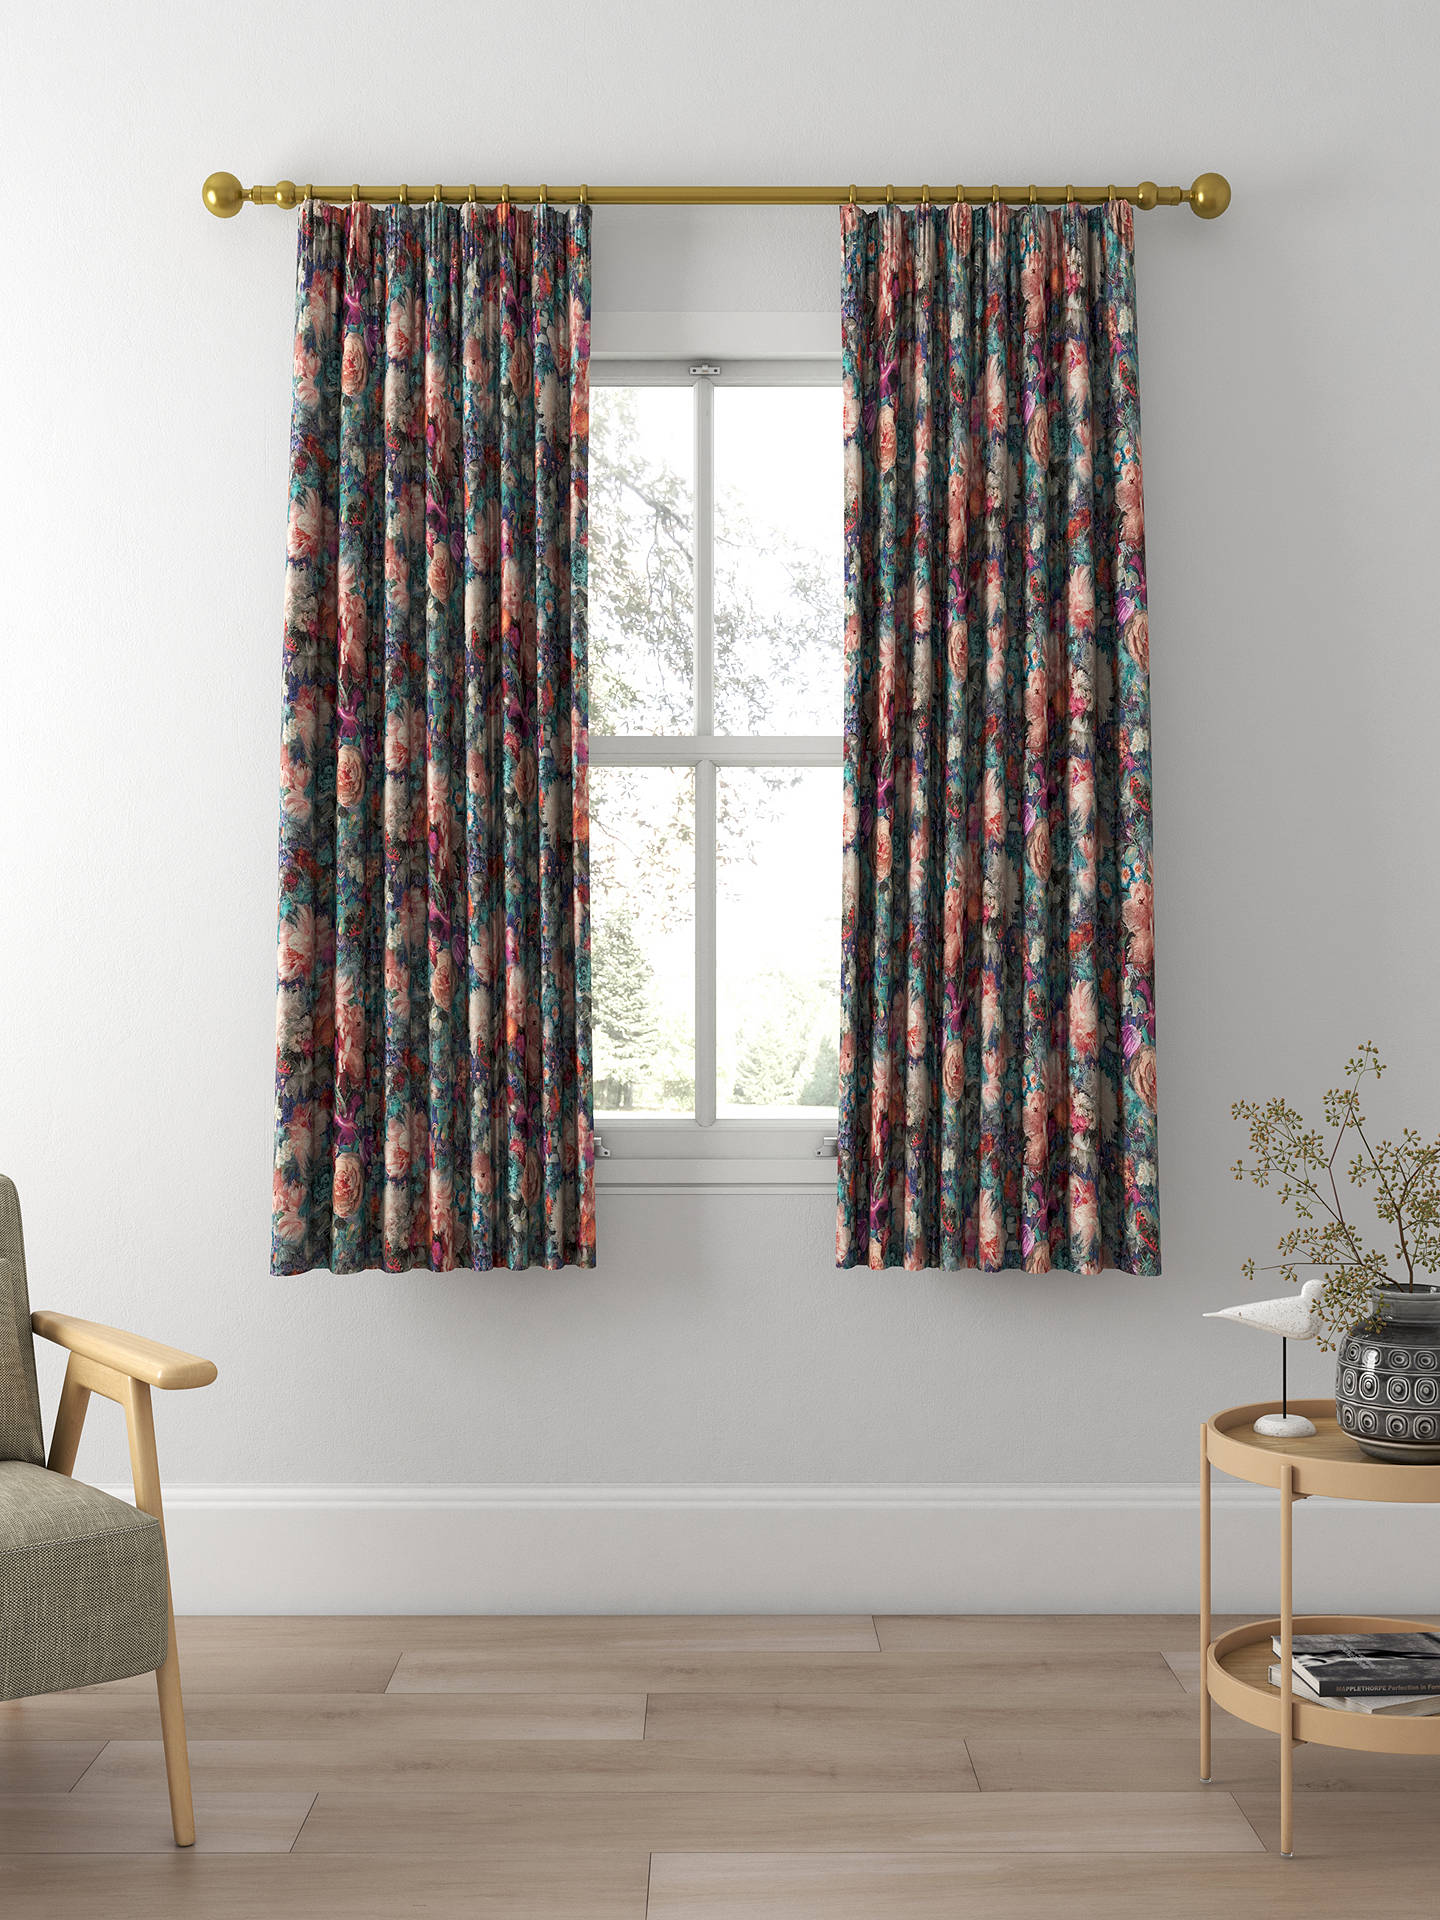 GP & J Baker Royal Garden Linen Made to Measure Curtains, Jewel